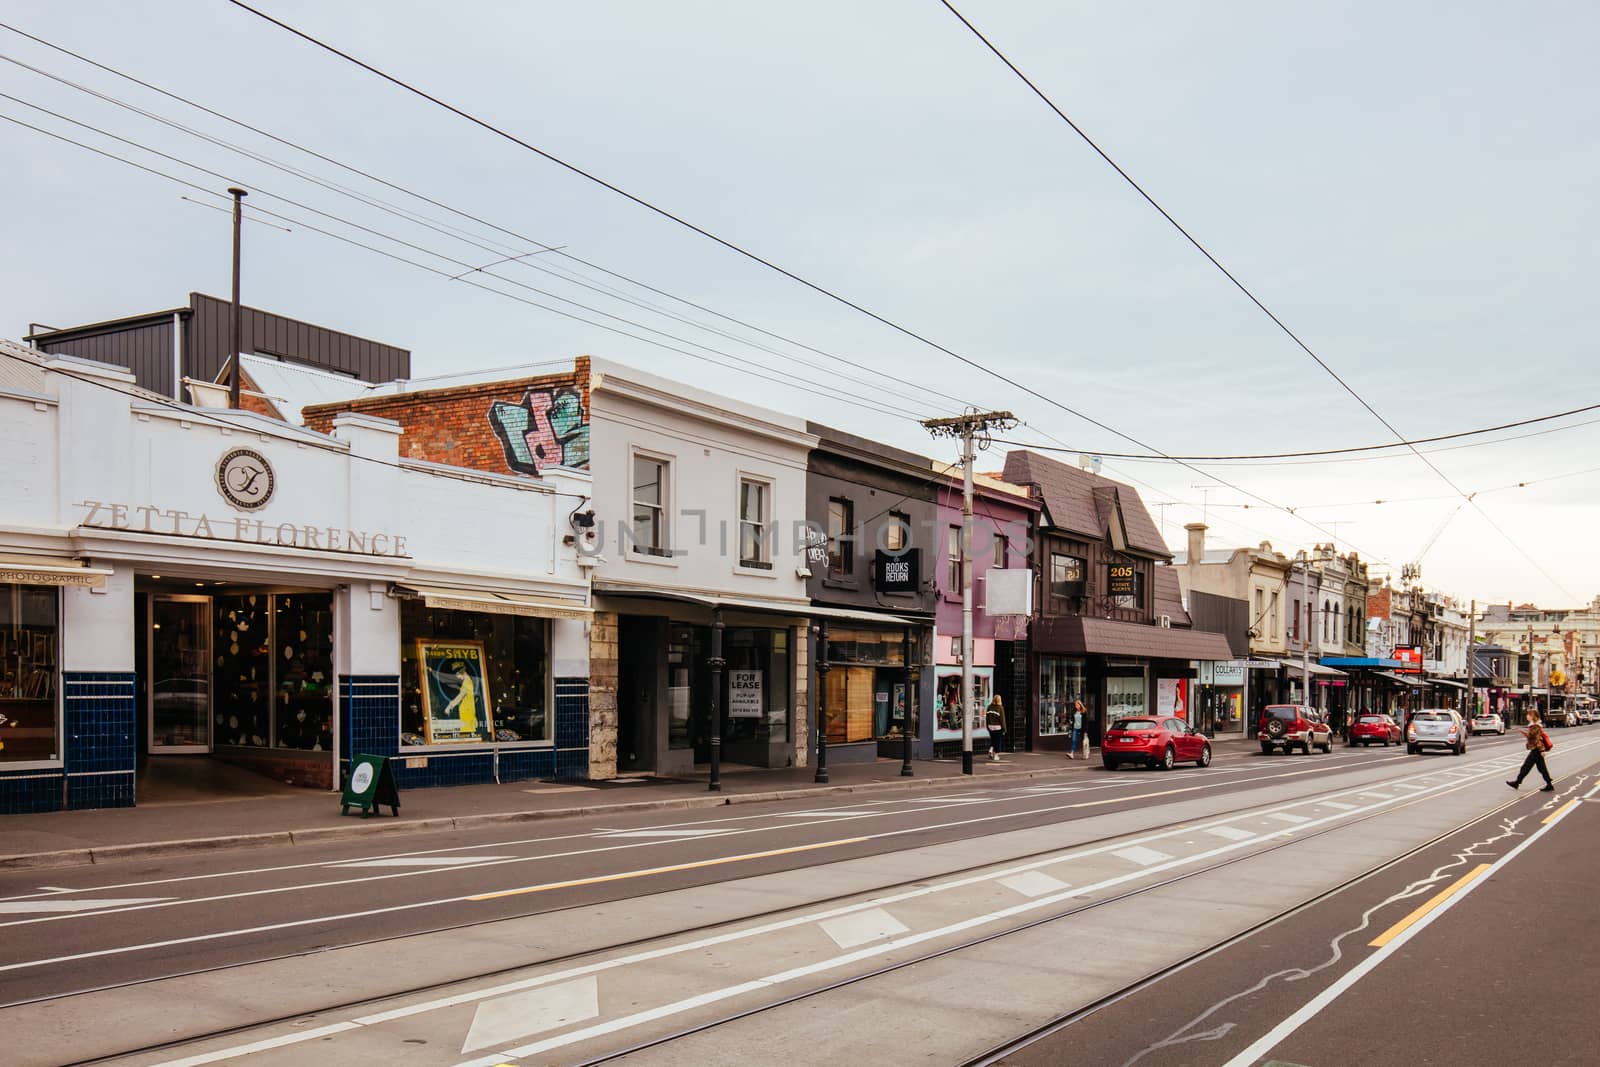 Brunswick St Architecture in Fitzroy Melbourne Australia by FiledIMAGE